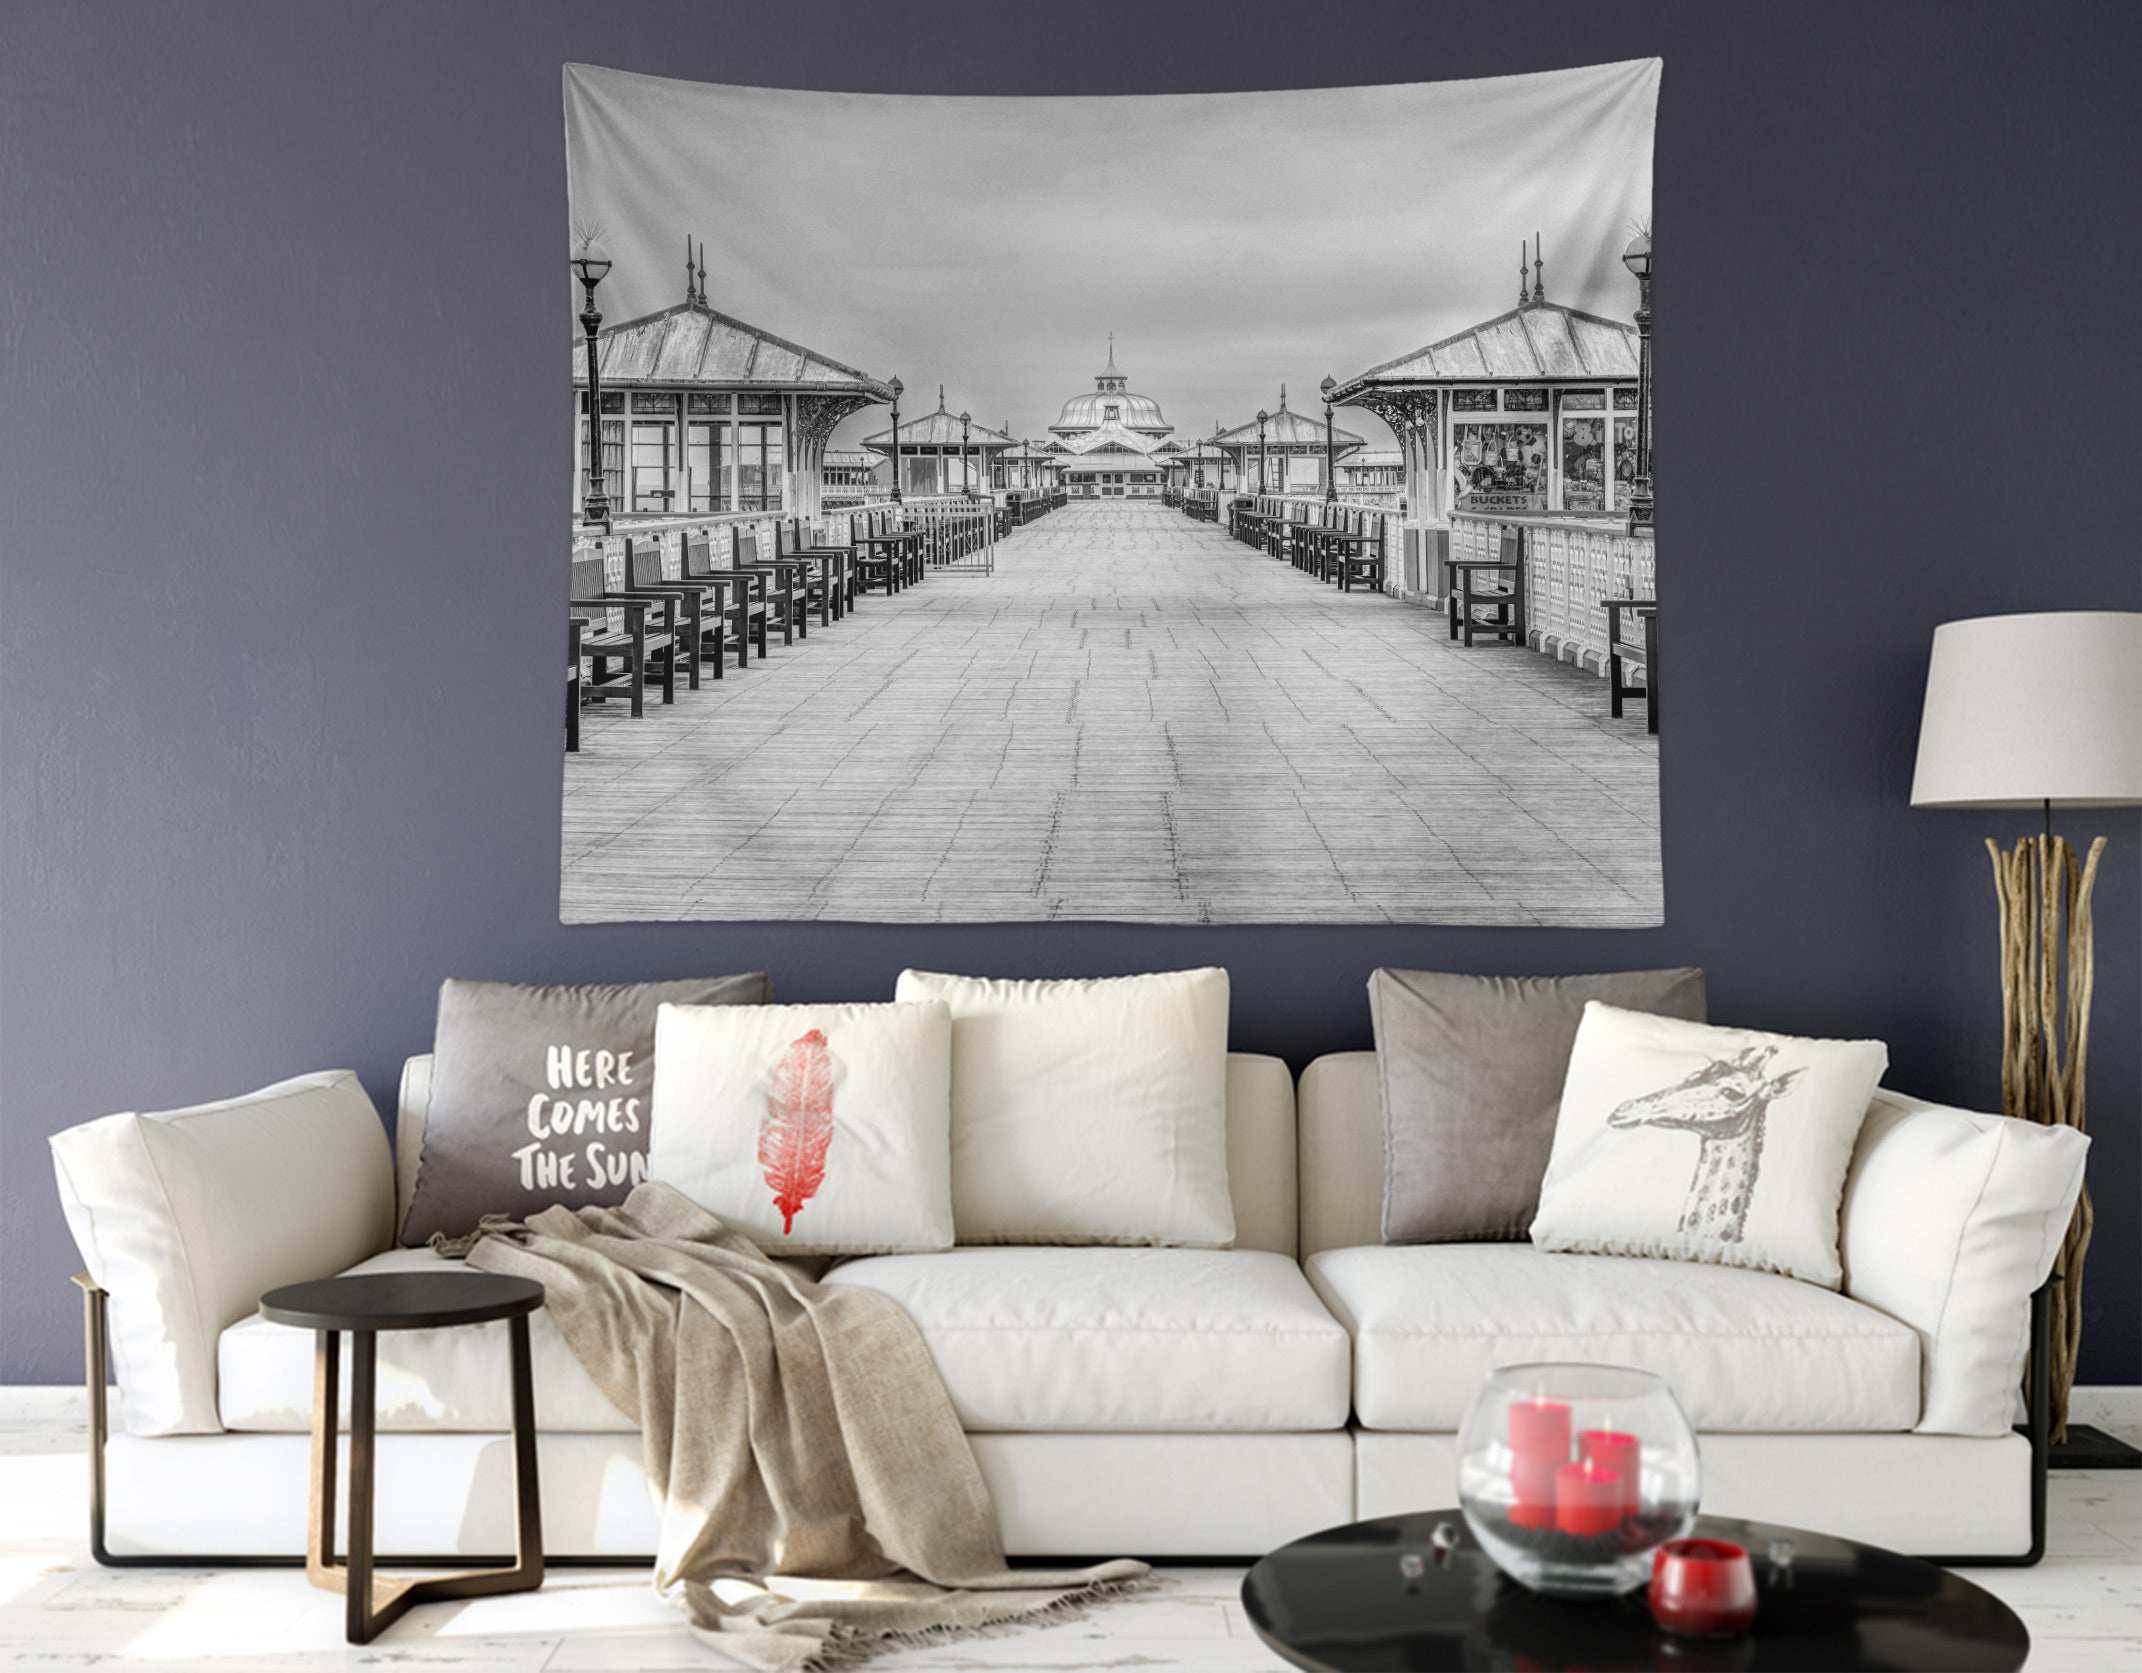 3D Grey Road 11676 Assaf Frank Tapestry Hanging Cloth Hang